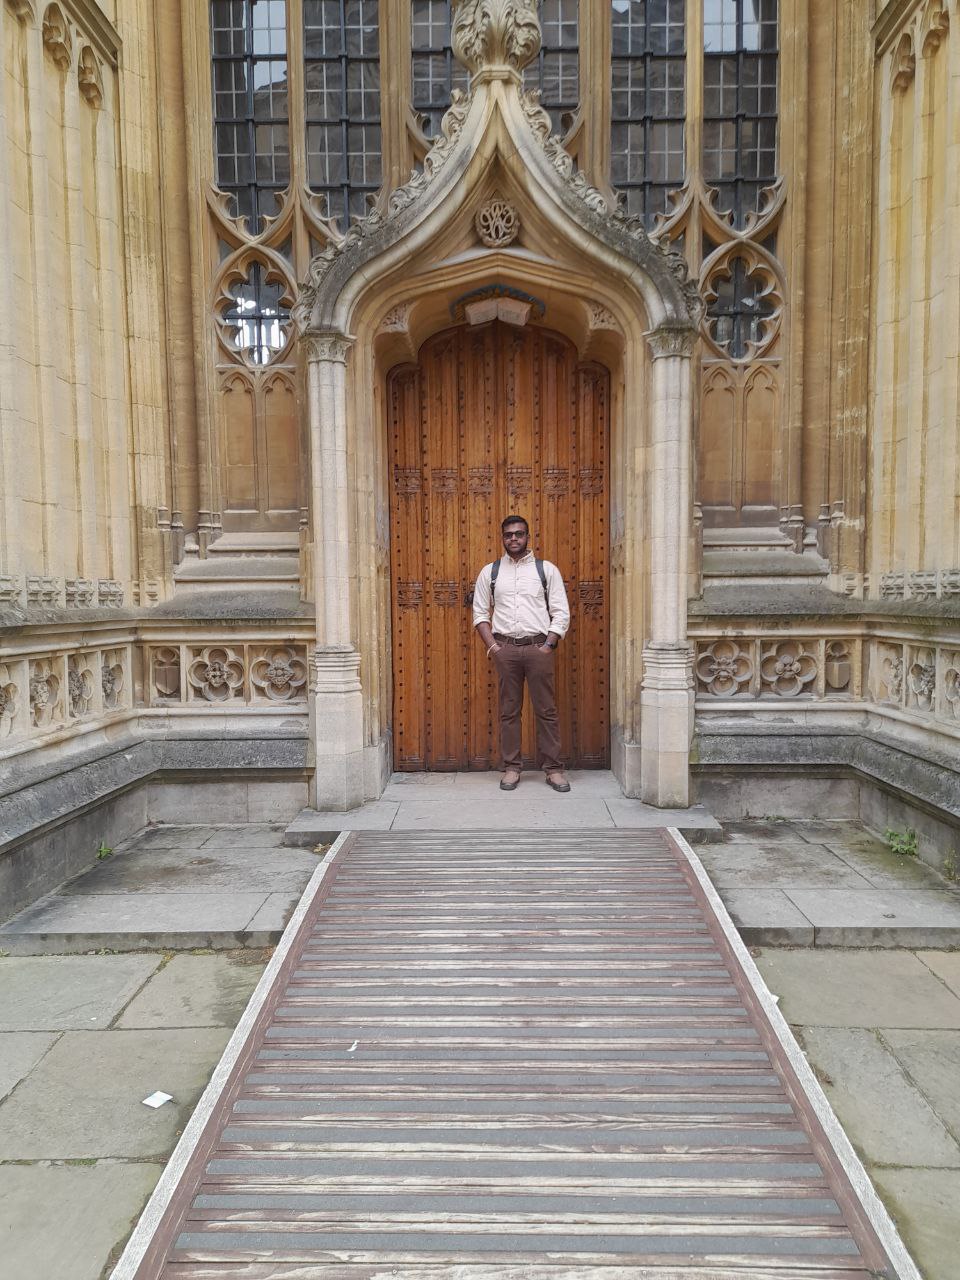 Sachintha Abeyrathne |Exploring Oxford